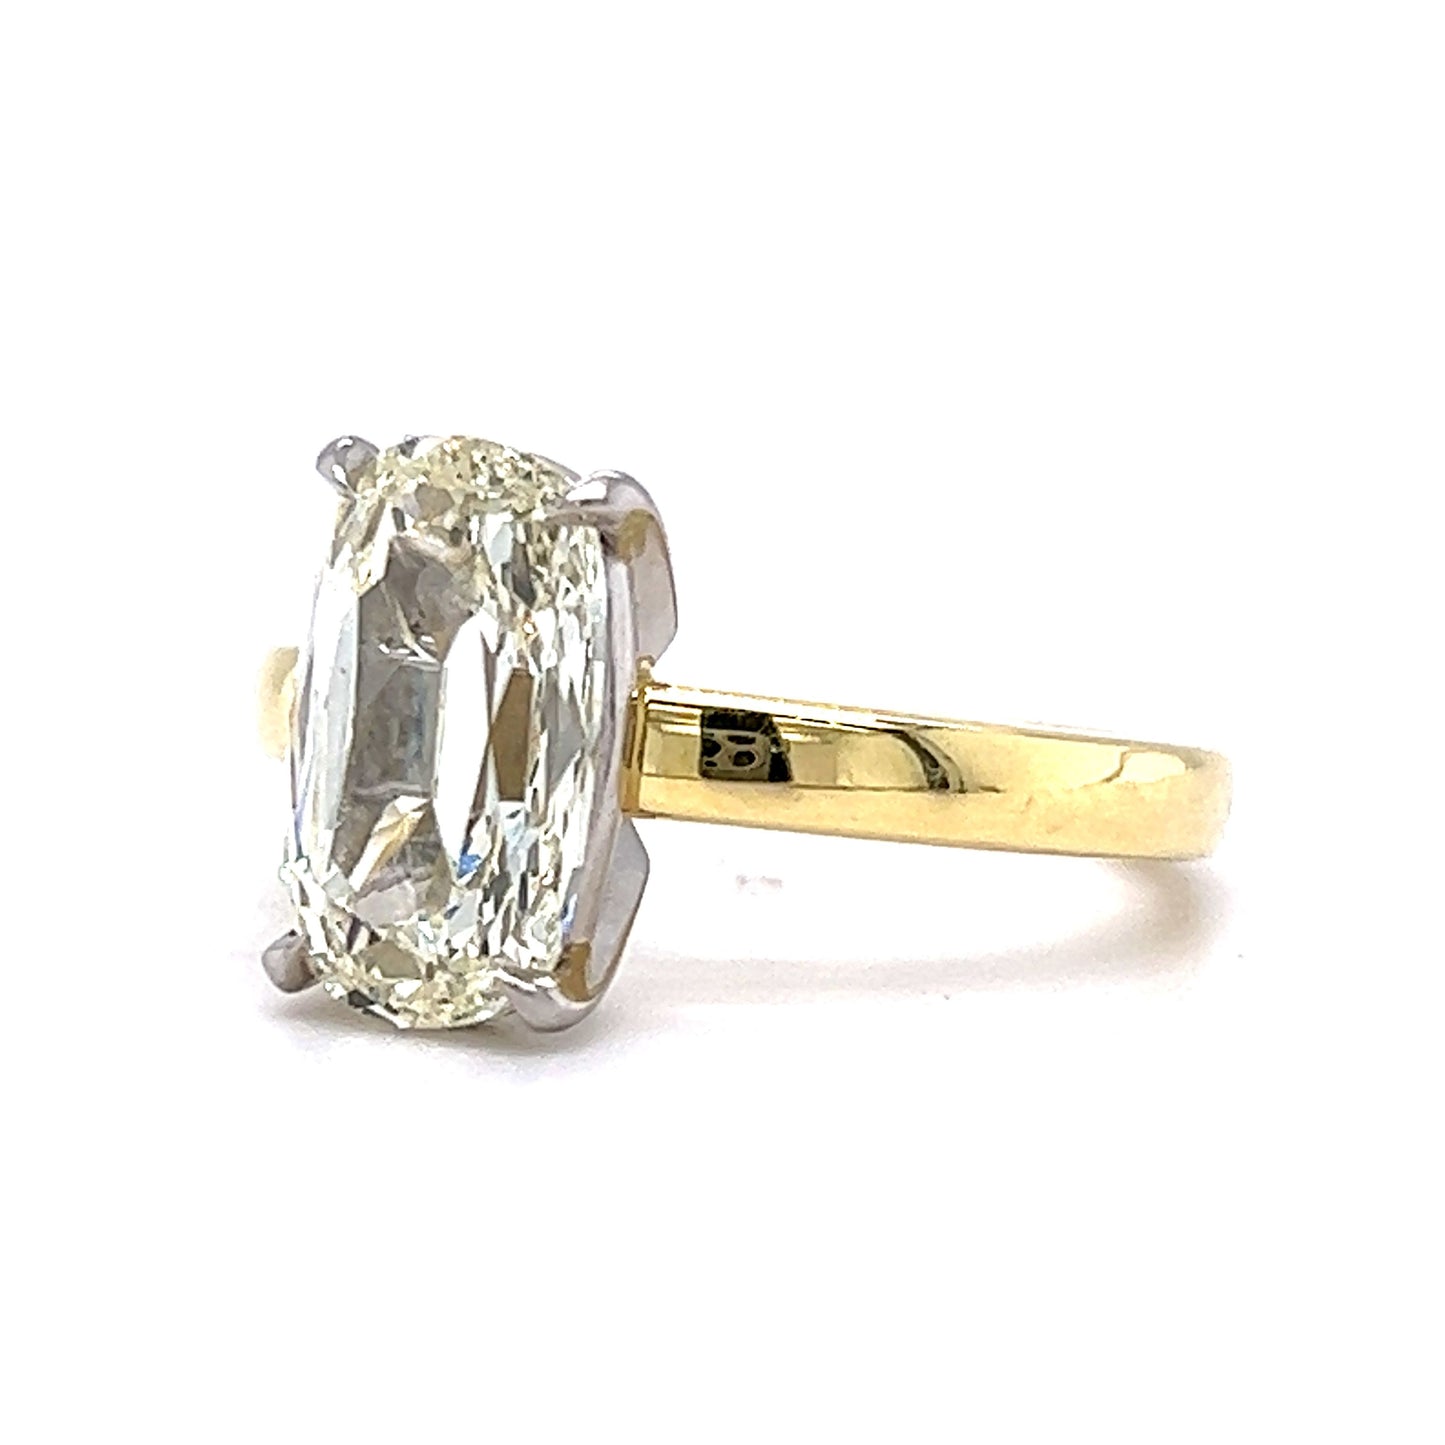 3.01 Cushion Cut Diamond Engagement Ring in 18k Yellow Gold